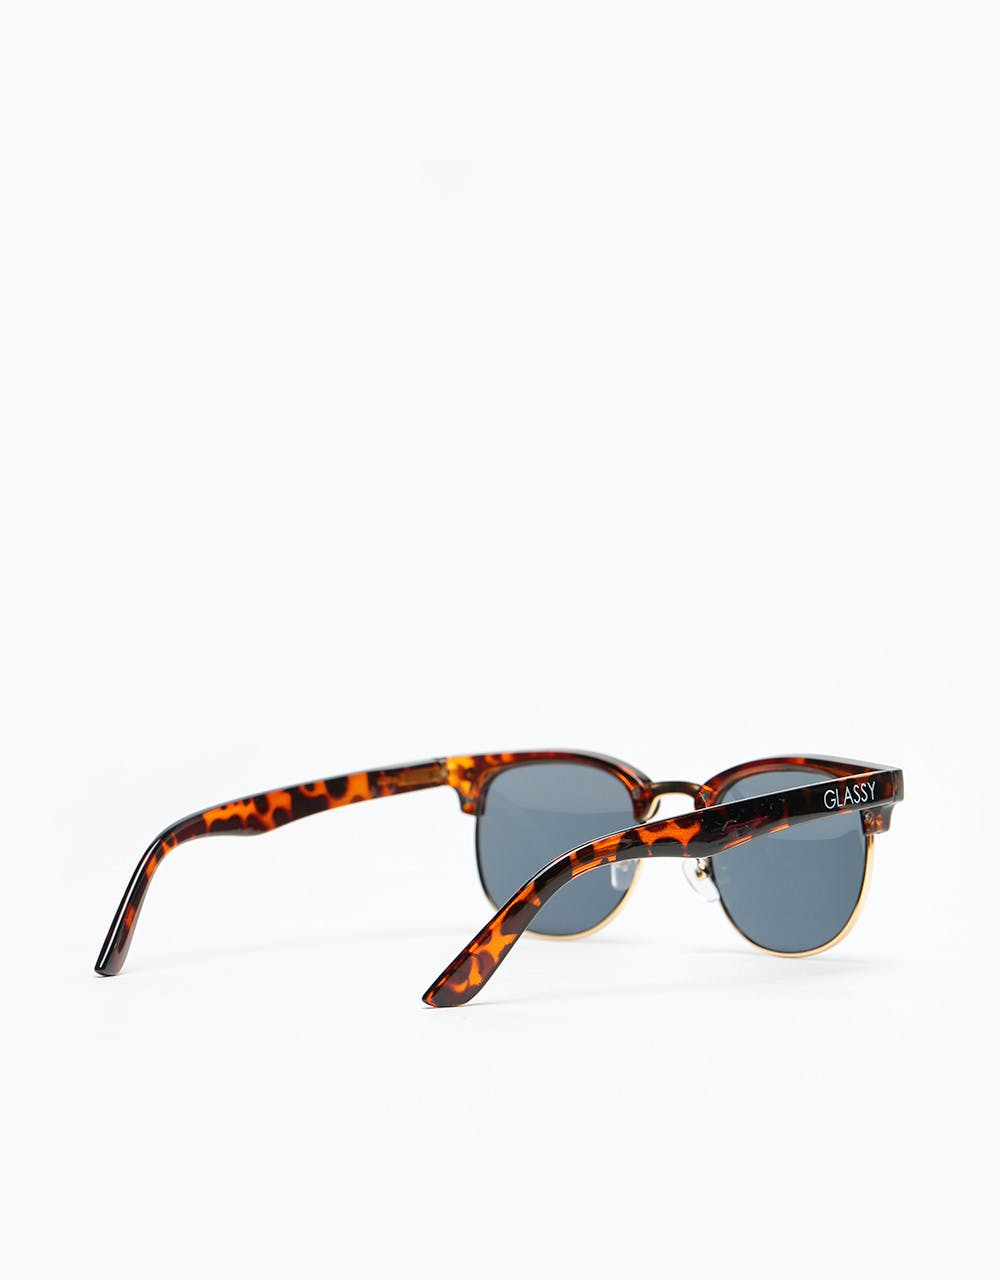 Glassy Sunhater Morrison Premium Polarised Sunglasses - Black/Tortoise